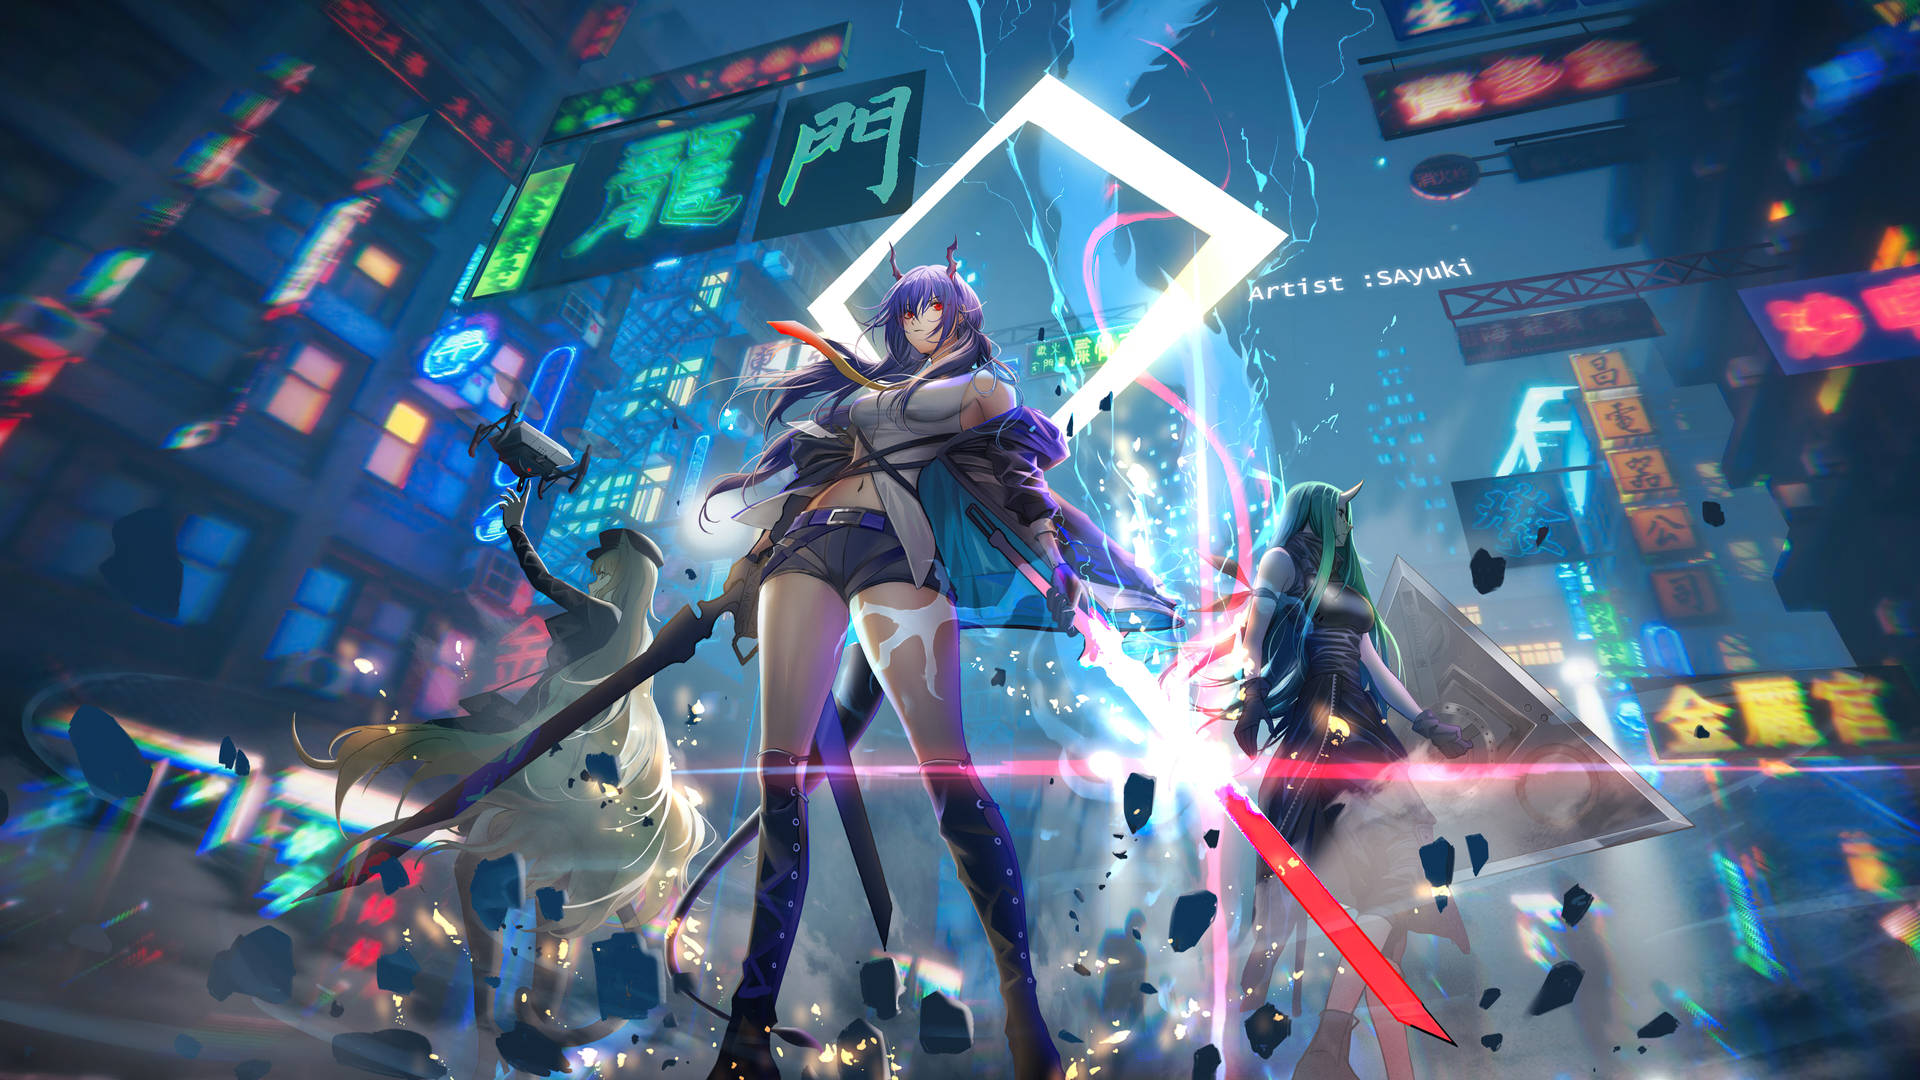 Cool Anime Futuristic City Background